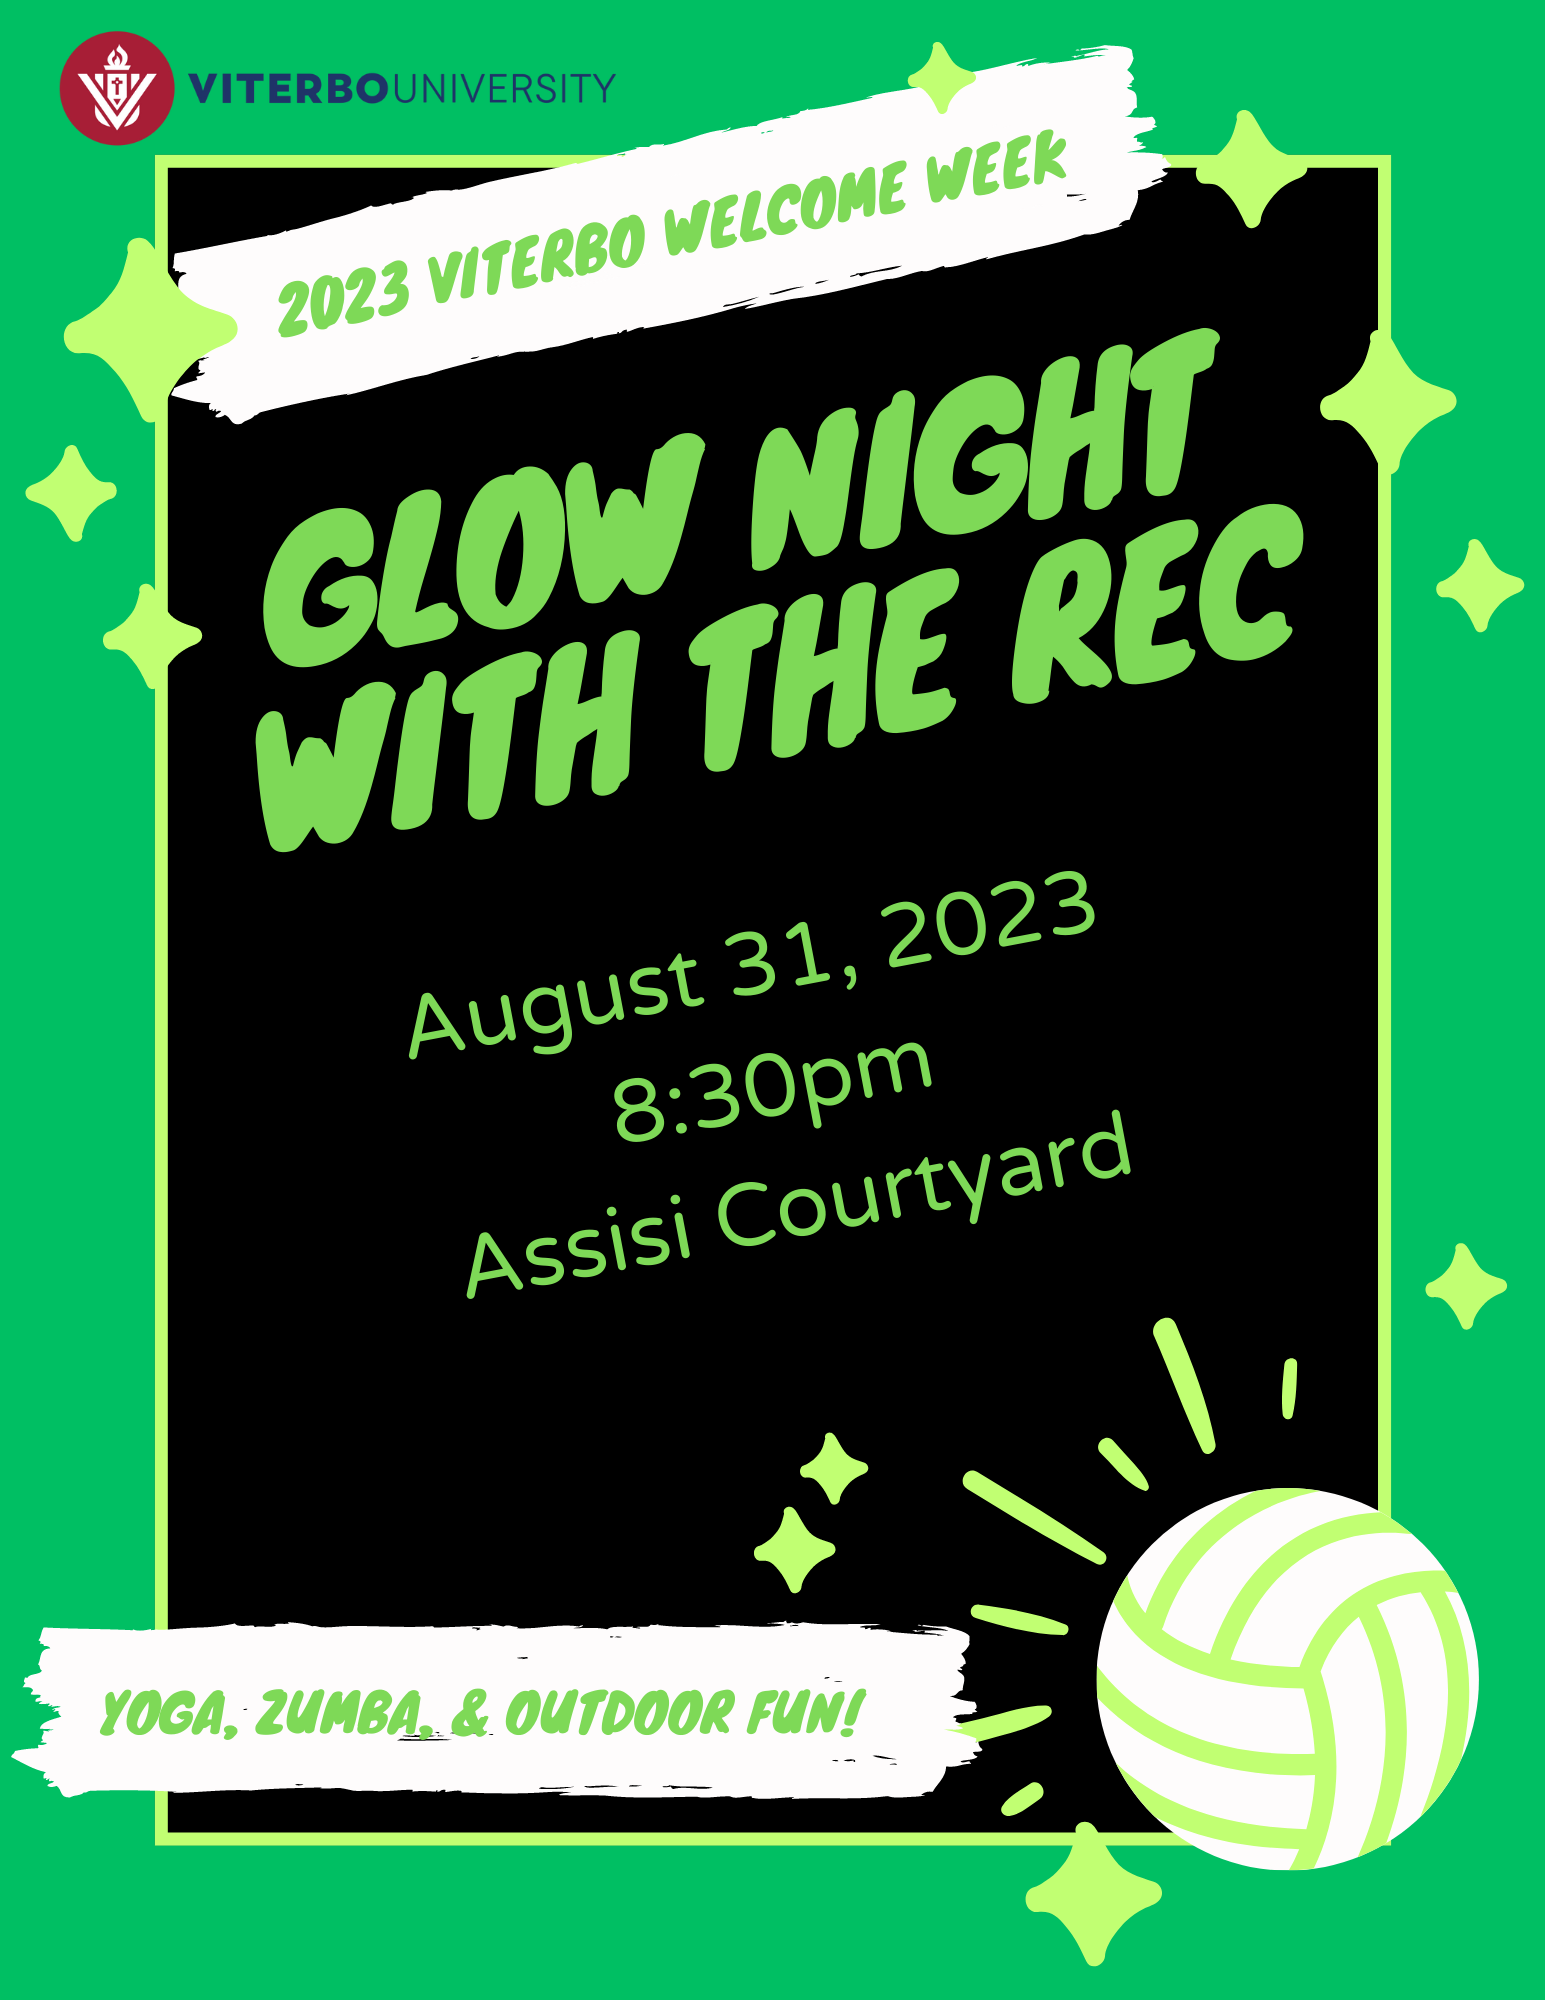 2023 Welcome Week Glow Night Recreation